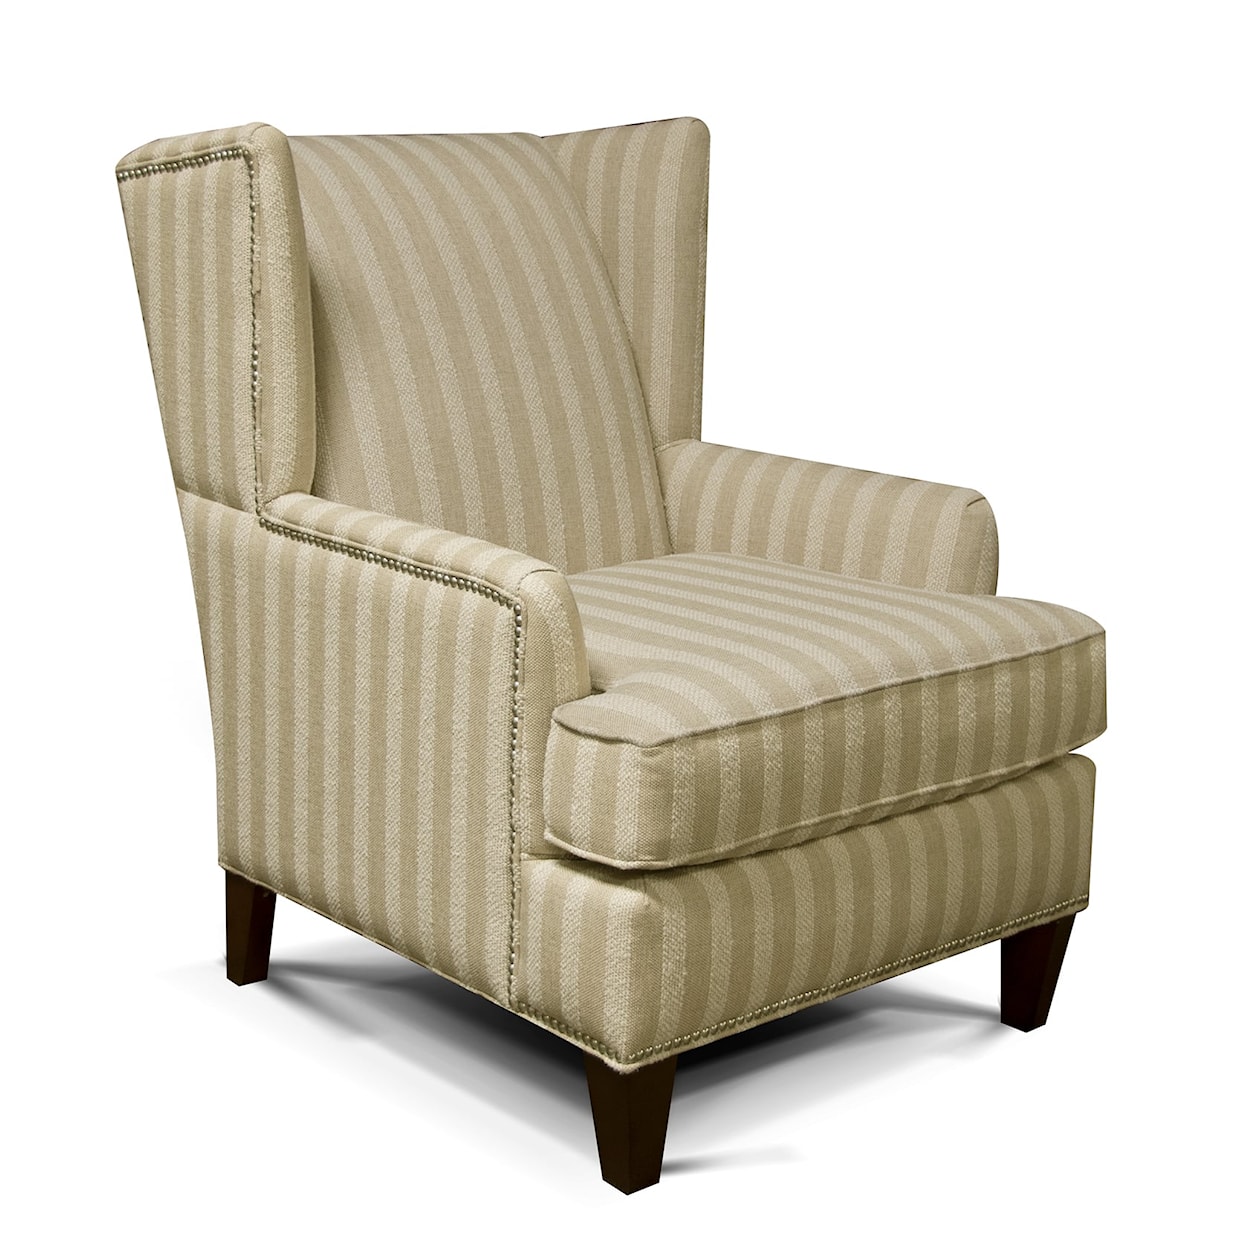 England 470/490/N Series Accent Chair